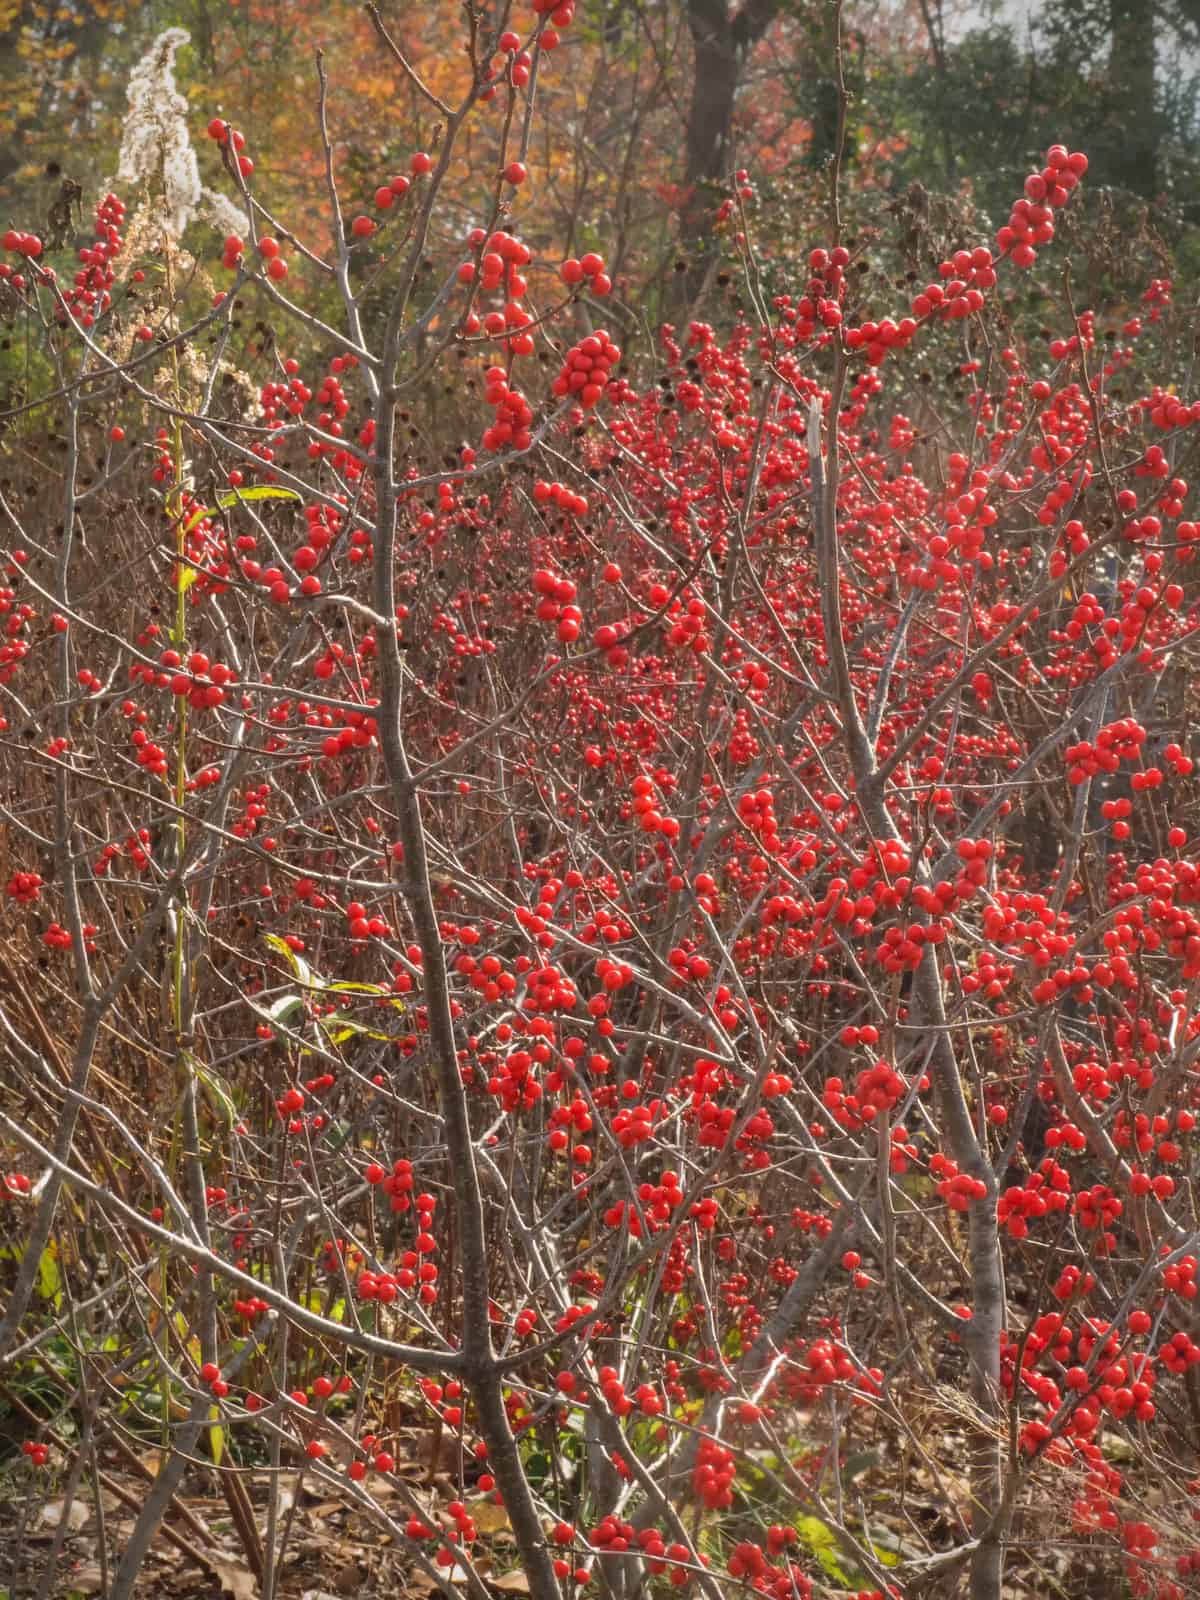 The Beautiful Berry - 9 Garden Shrubs for Fall & Winter Florals